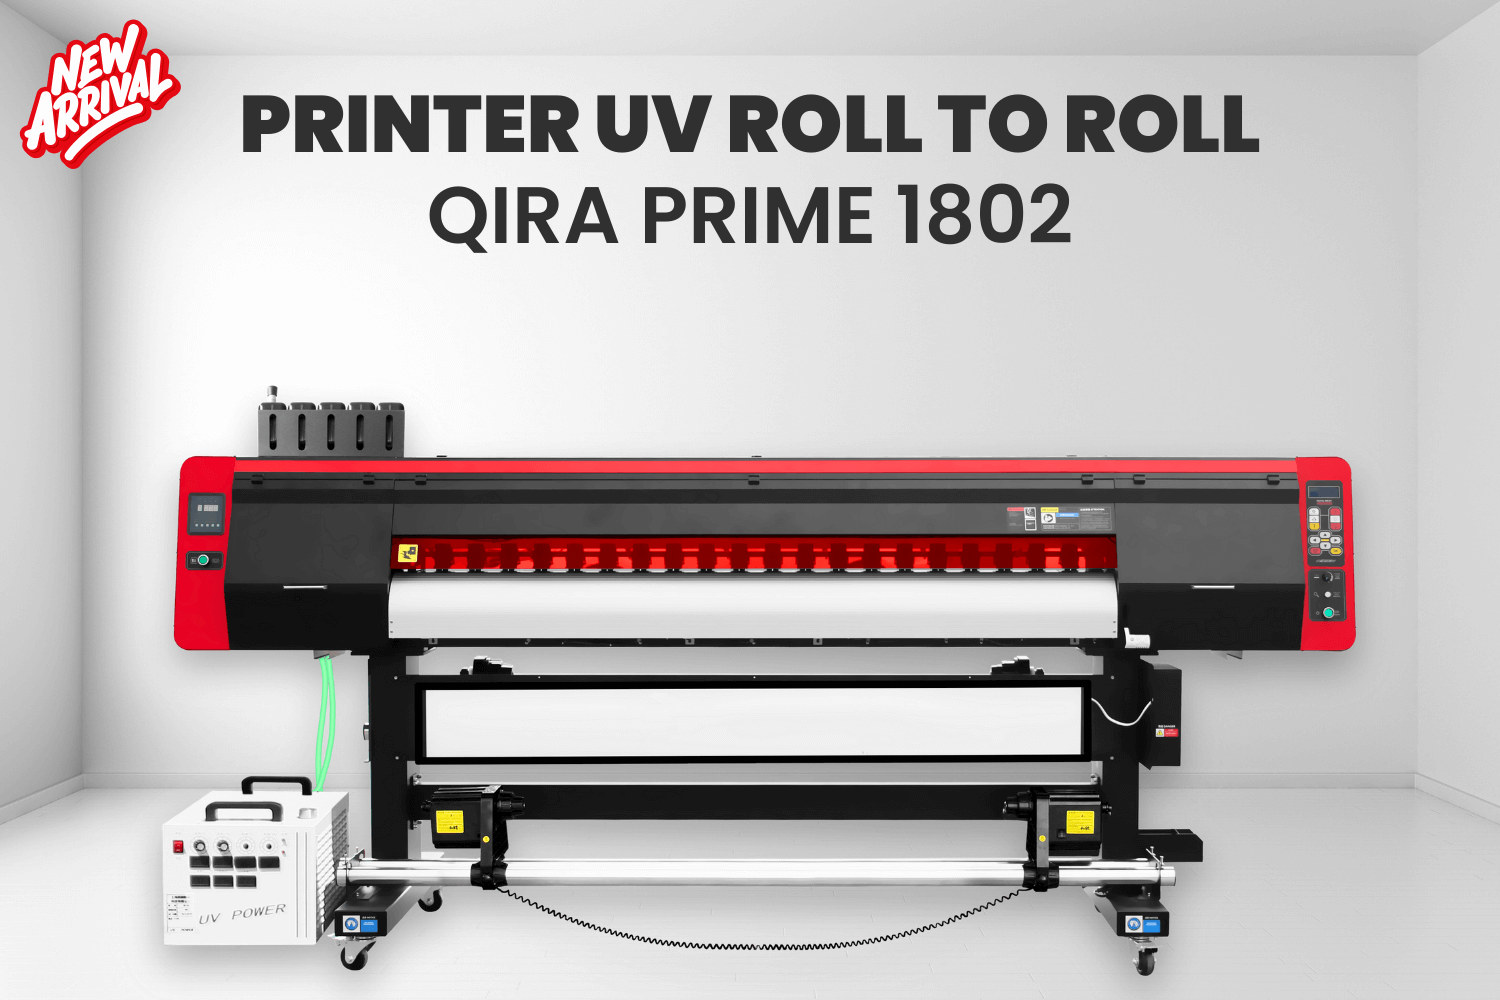 Printer Uv Roll To Roll Qira Prime 1802